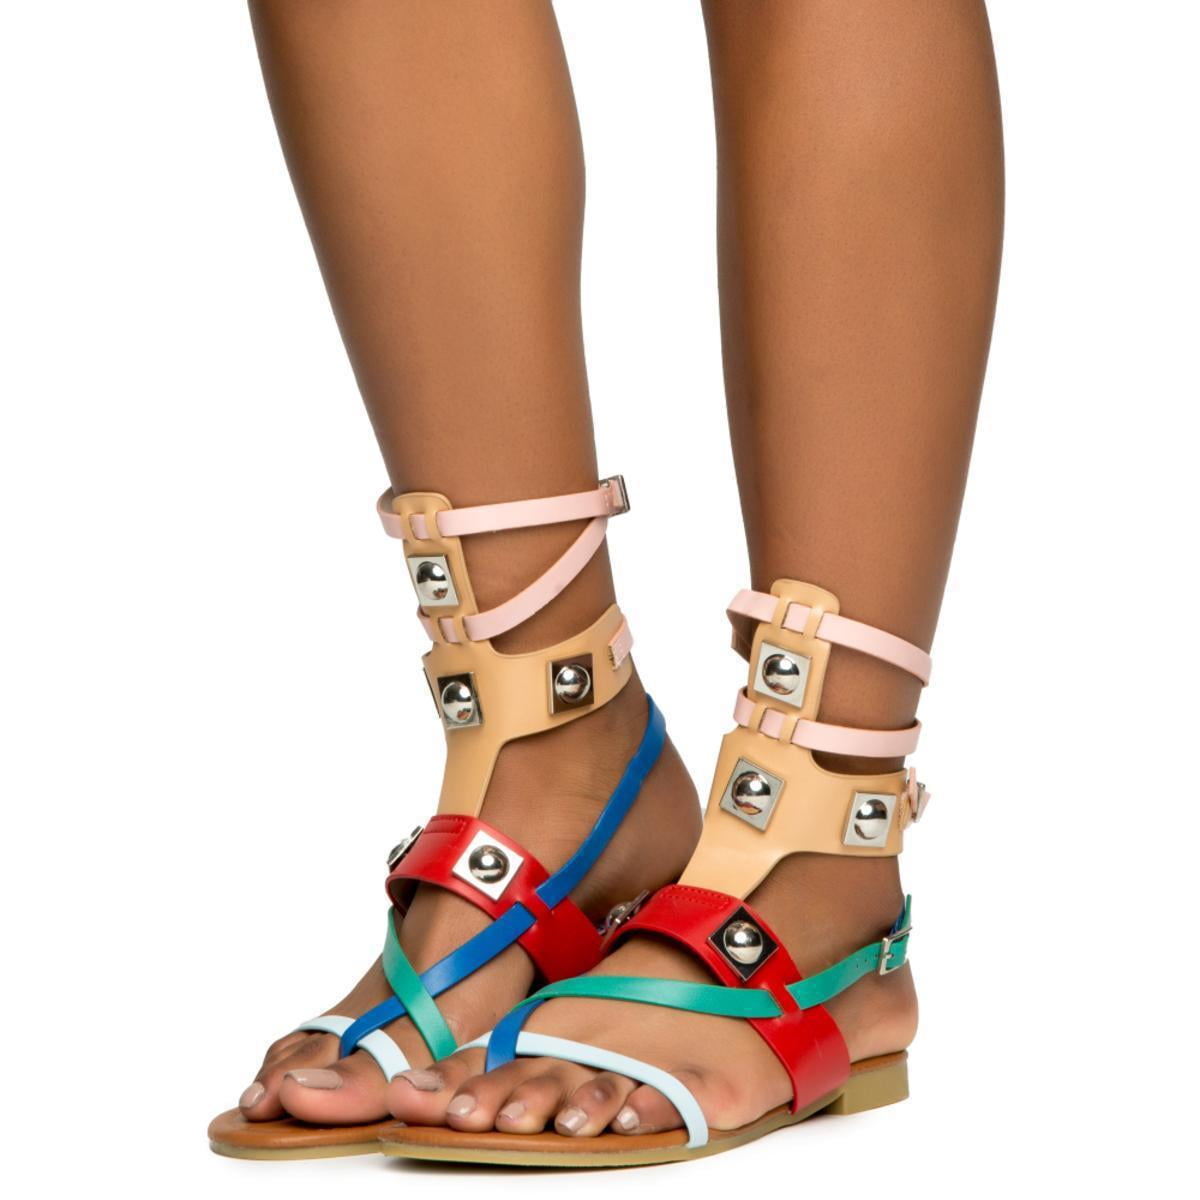 Amiley Women Sandals,Women Bohemia Sandals Gladiator Flat Peep-Toe Sandals Shoes Roman Strap Casual Sandals